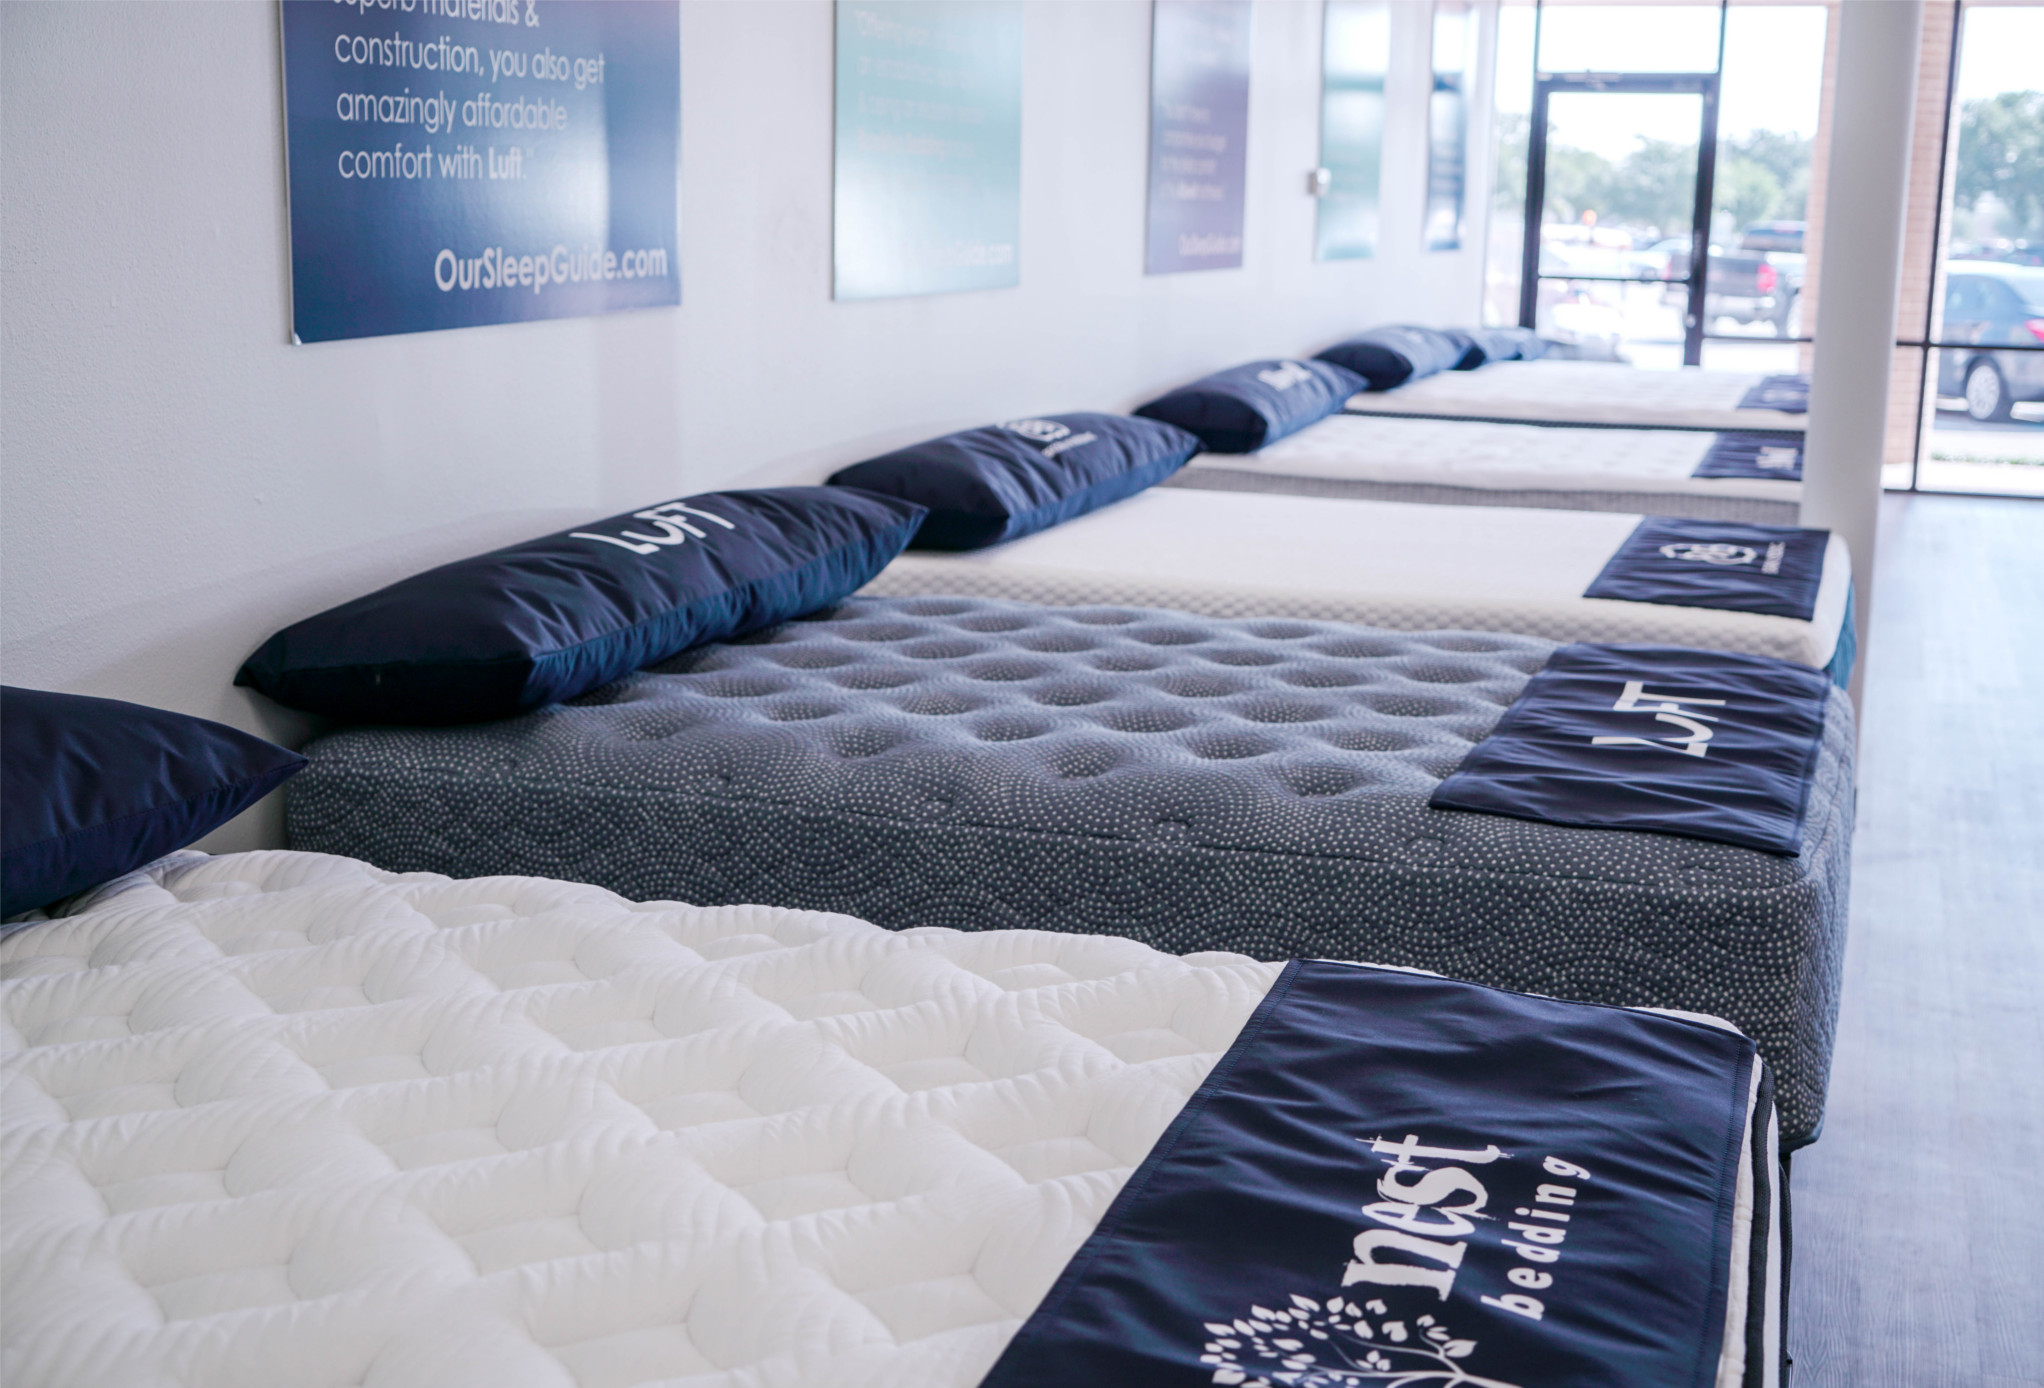 sleep sherpa online mattress showroom hours